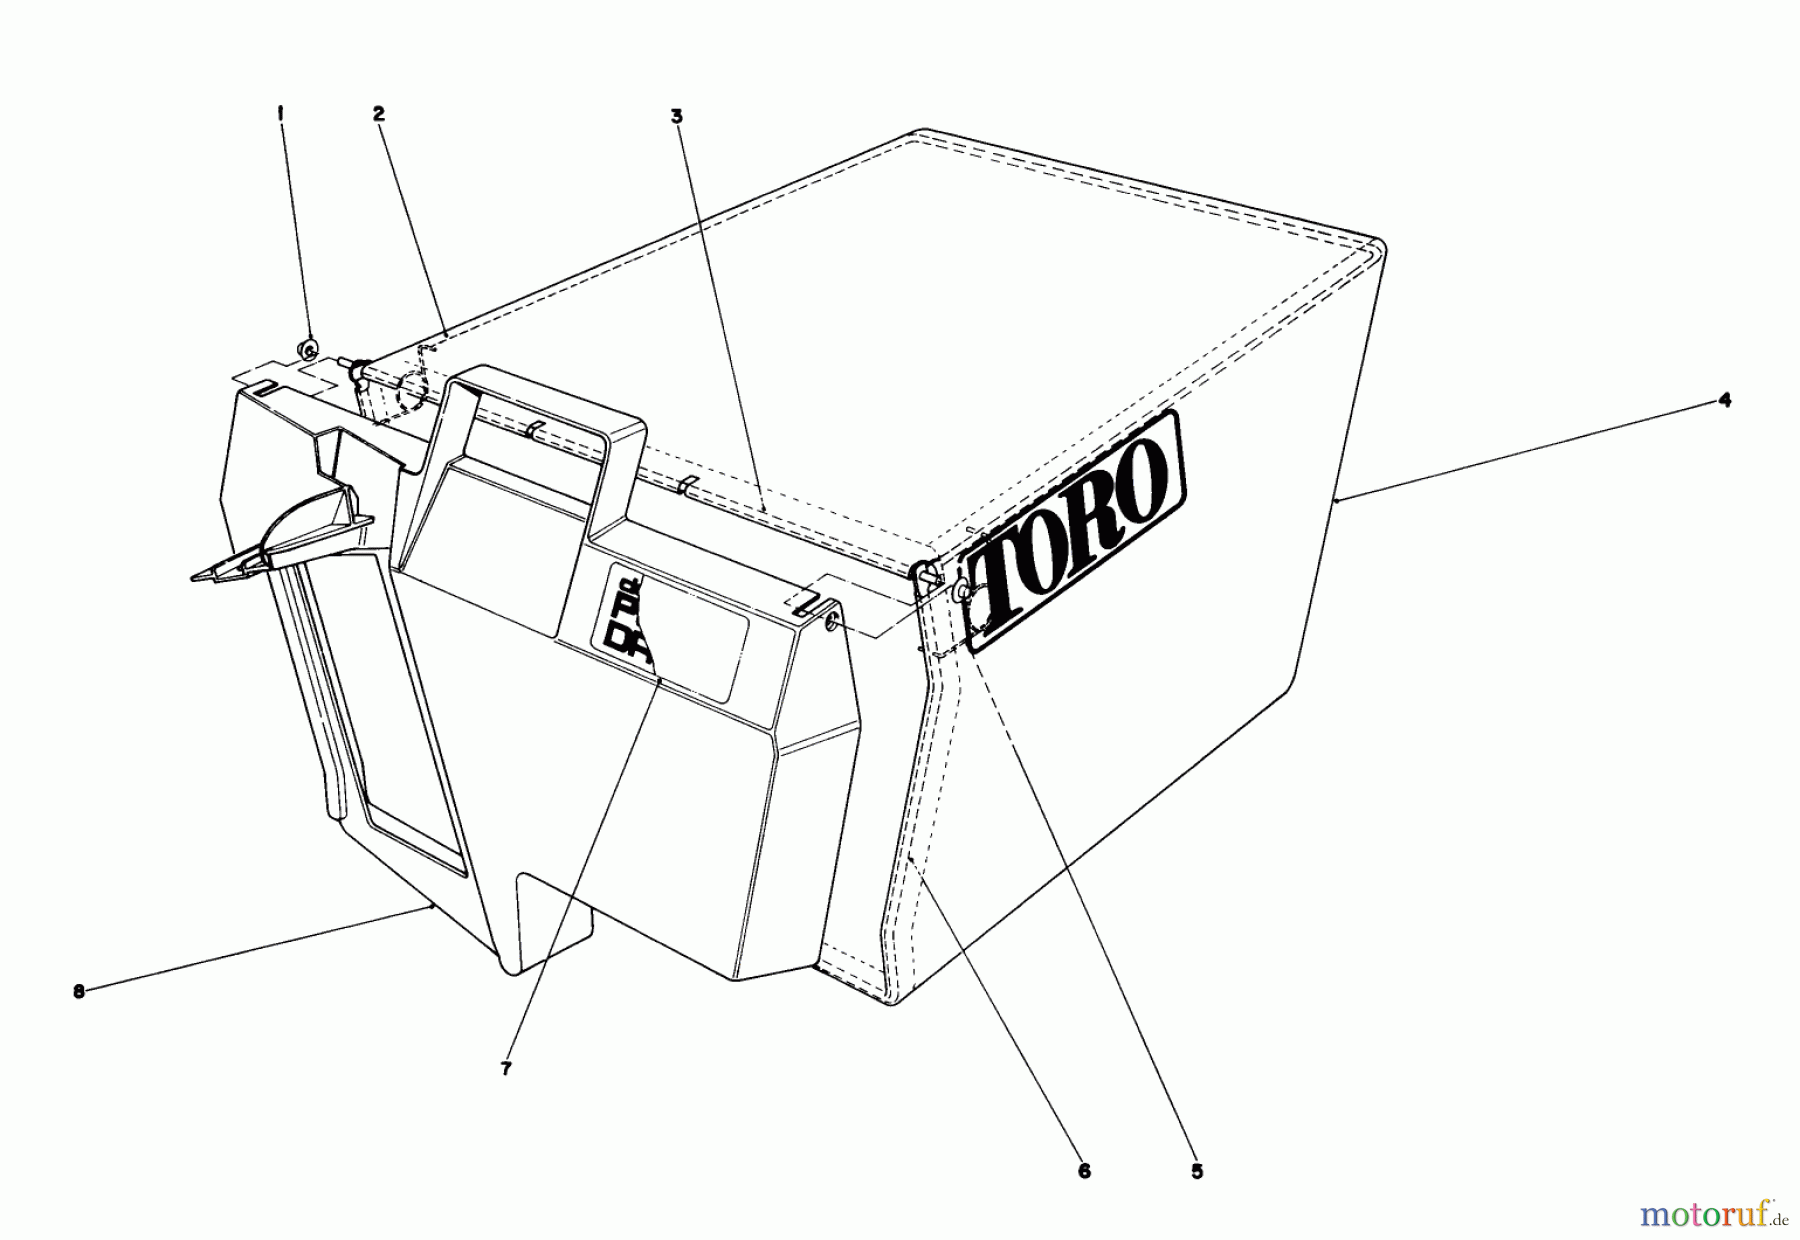  Toro Neu Accessories, Mower 59174 - Toro Rear Bagging Kit, Recycler Mower (21